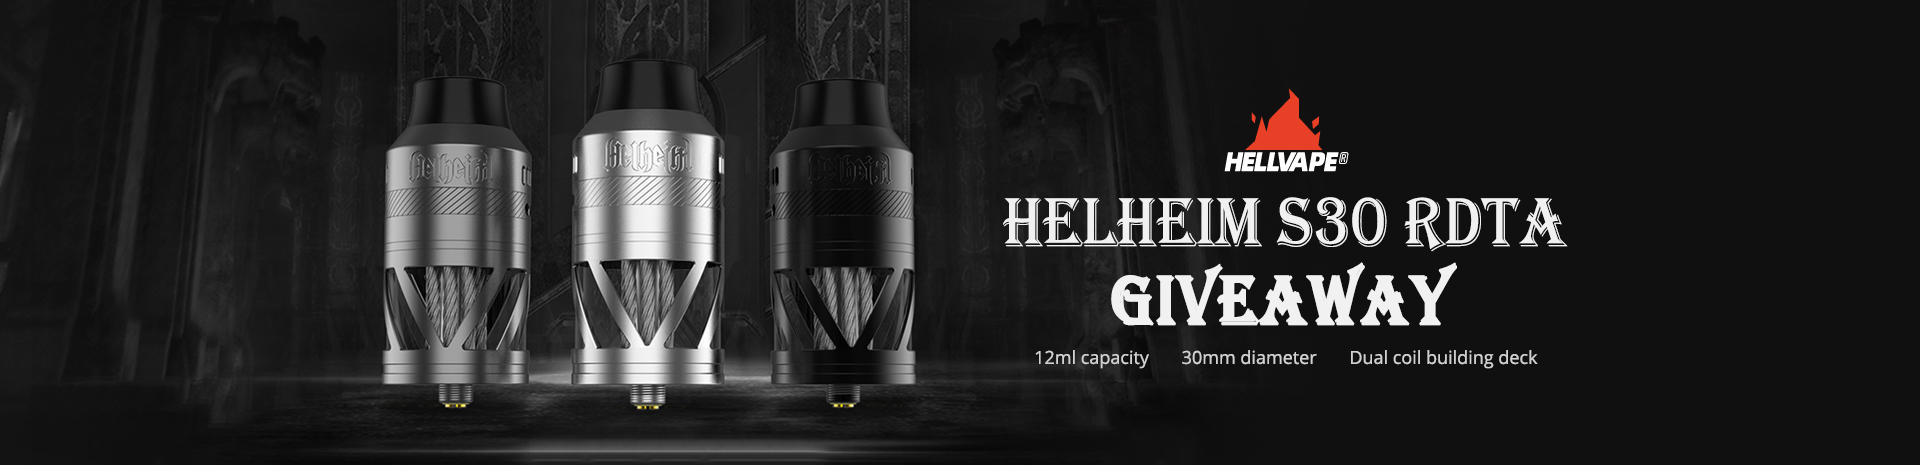 Hellvape Helheim S30 RDTA Giveaway